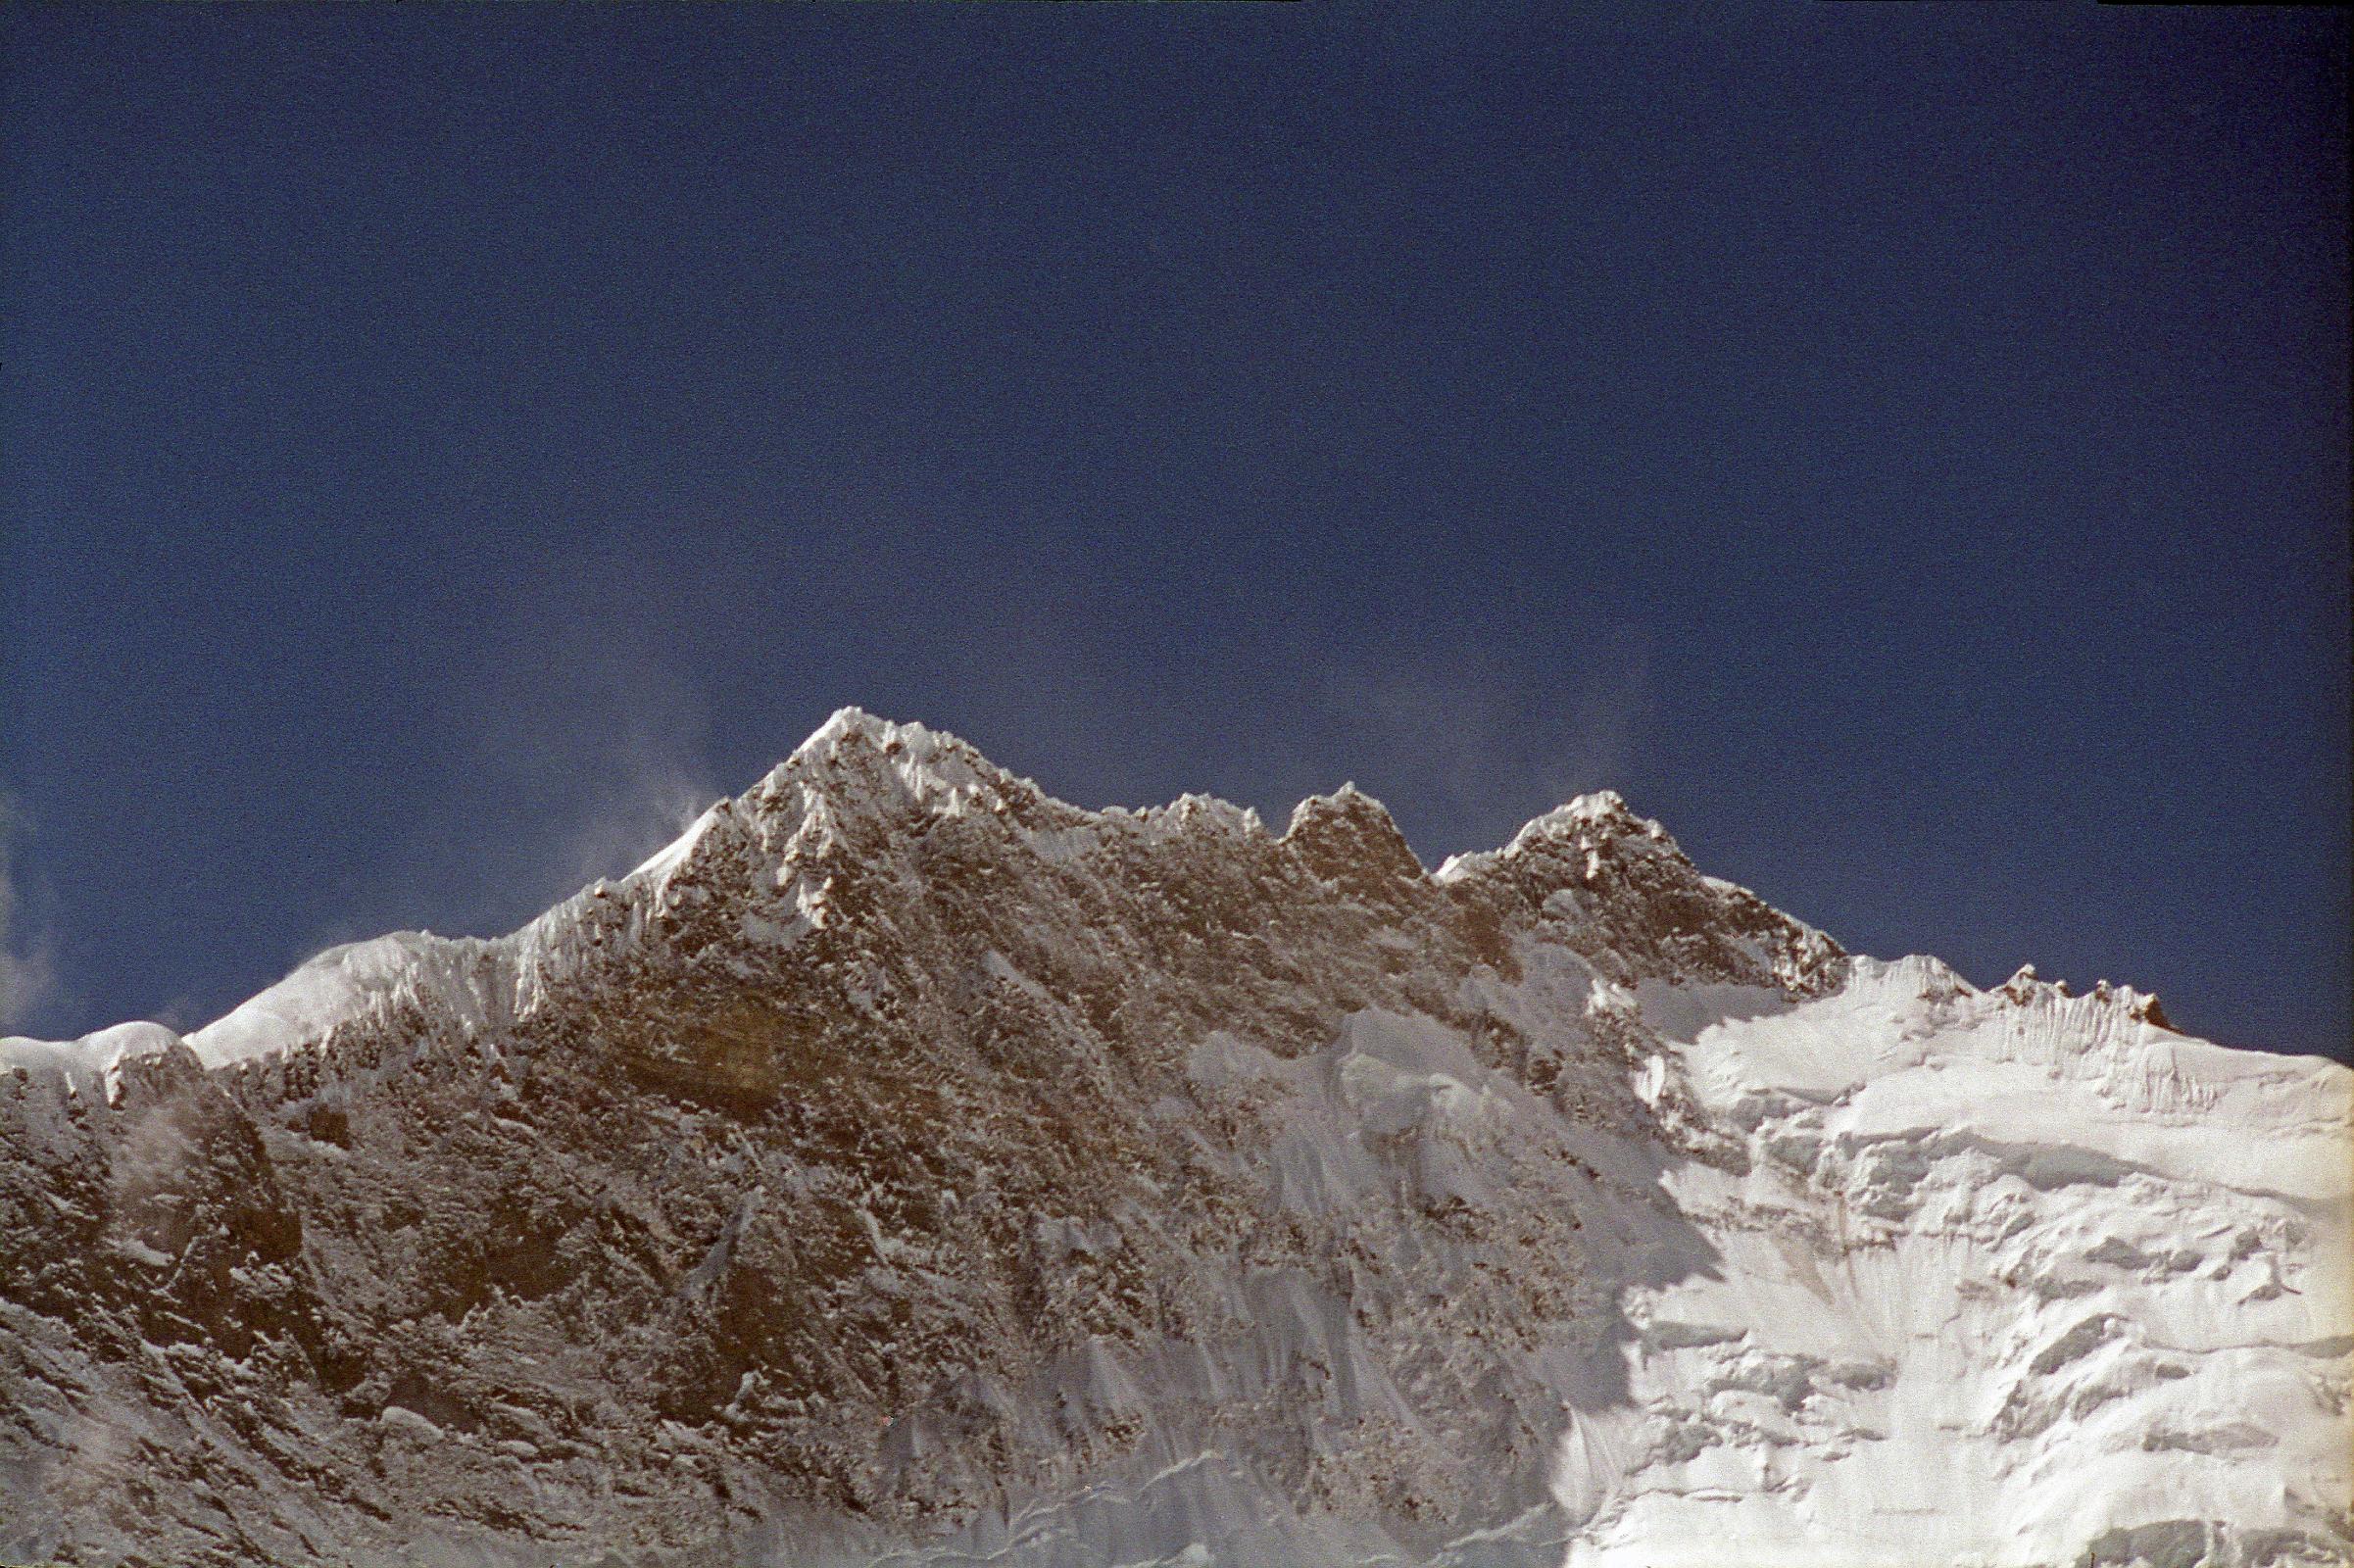 12 14 Lhotse Shar, Lhotse Middle, And Lhotse Main Close Up From Everest East Base Camp In Tibet